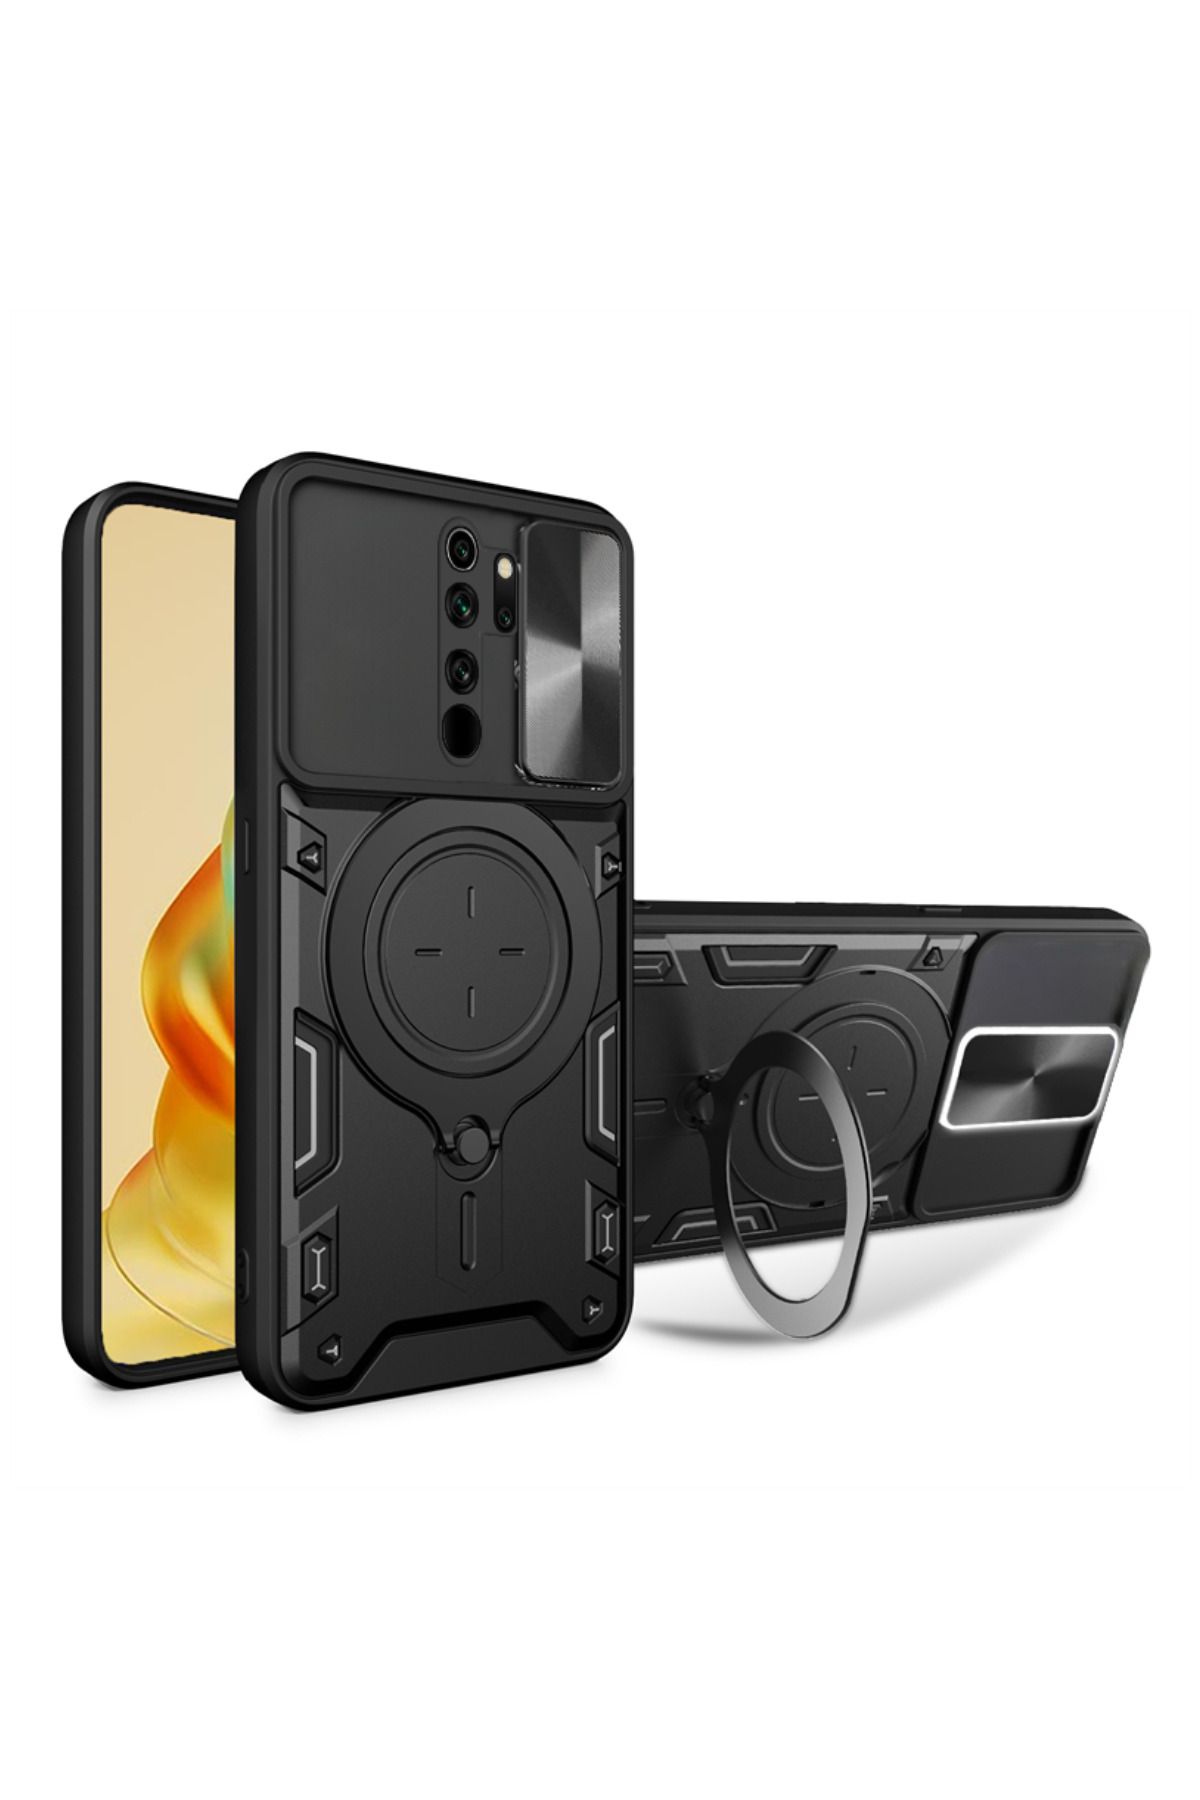 Zebana Xiaomi Redmi Note 8 Pro Uyumlu Kılıf Manyetik Standlı Armor Silikon Kılıf Siyah